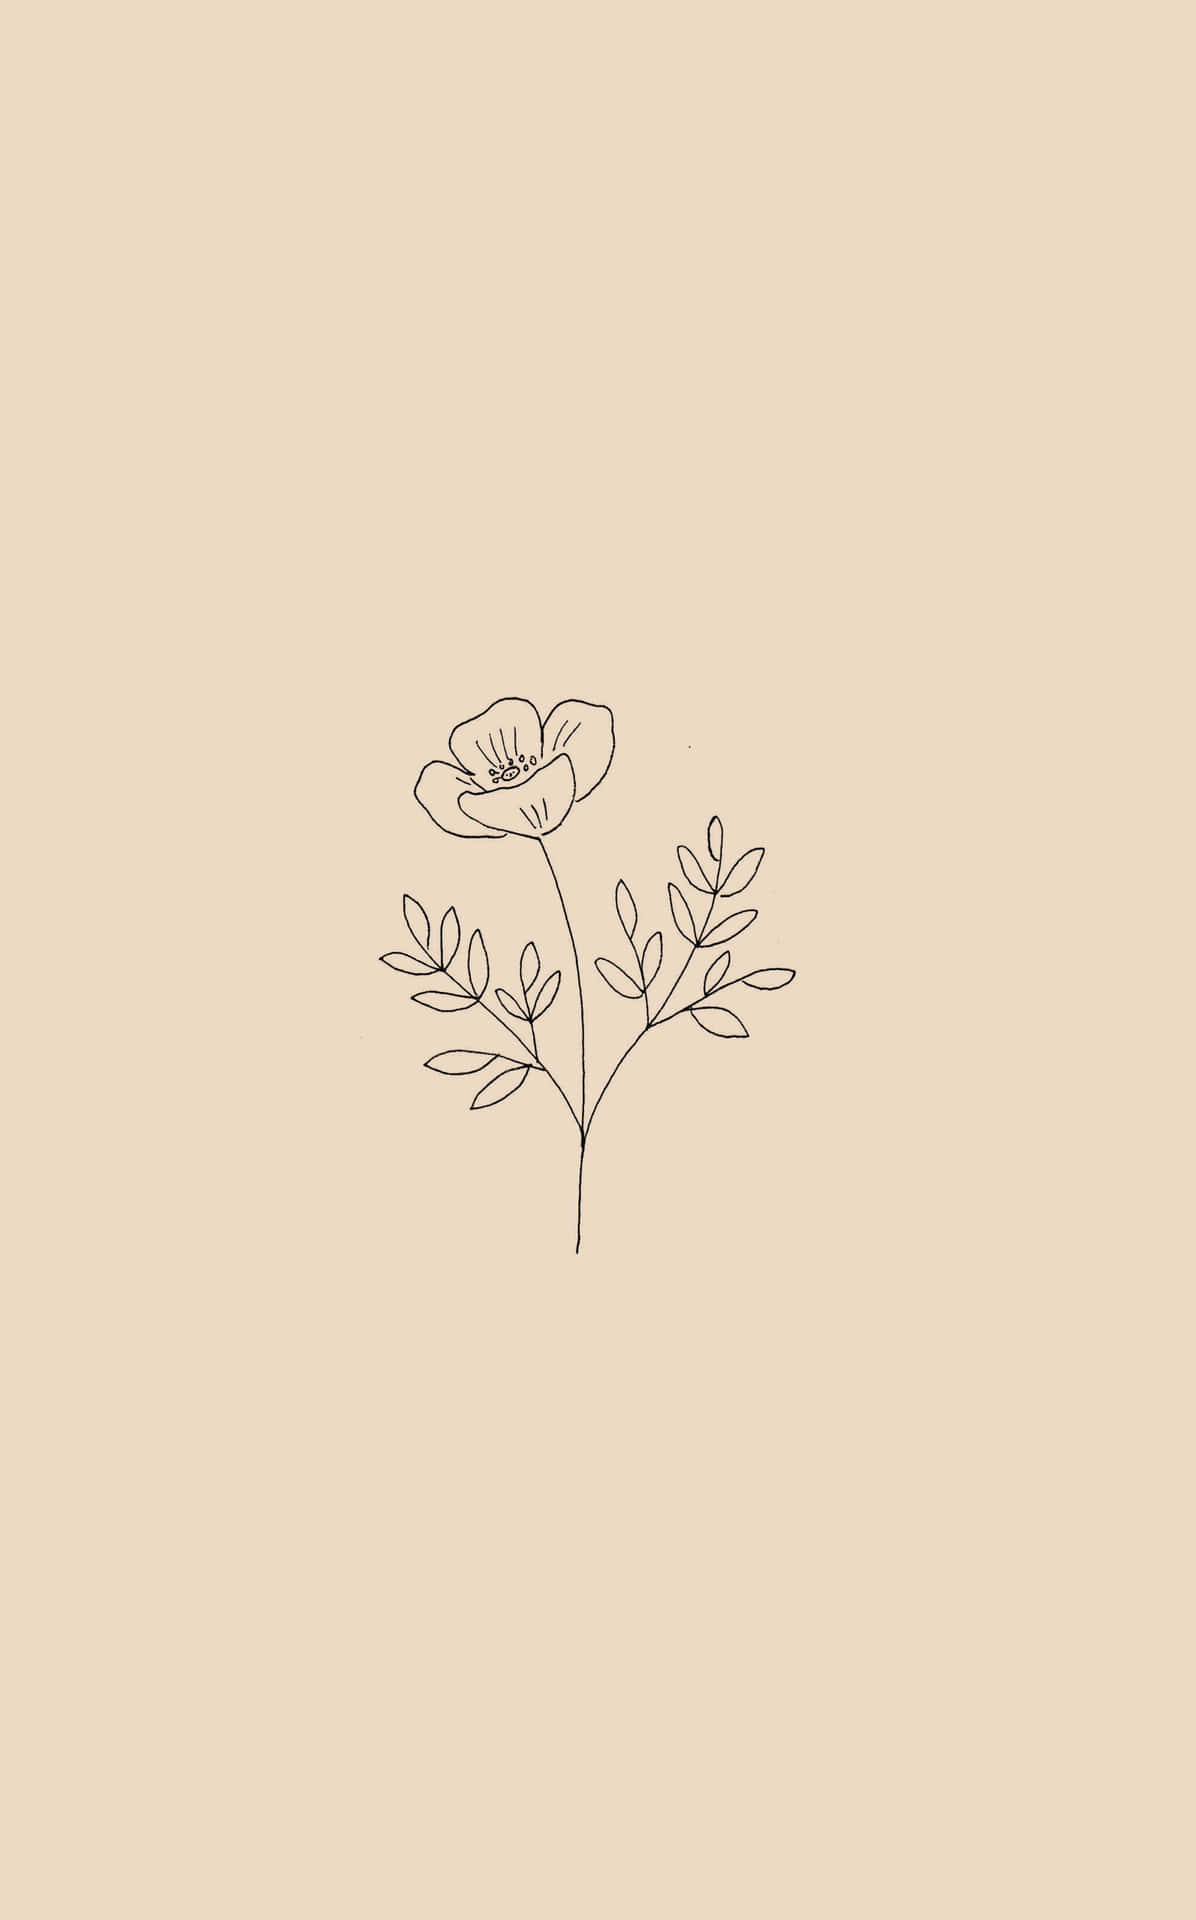 A Simple Flower Design On A Beige Background Wallpaper